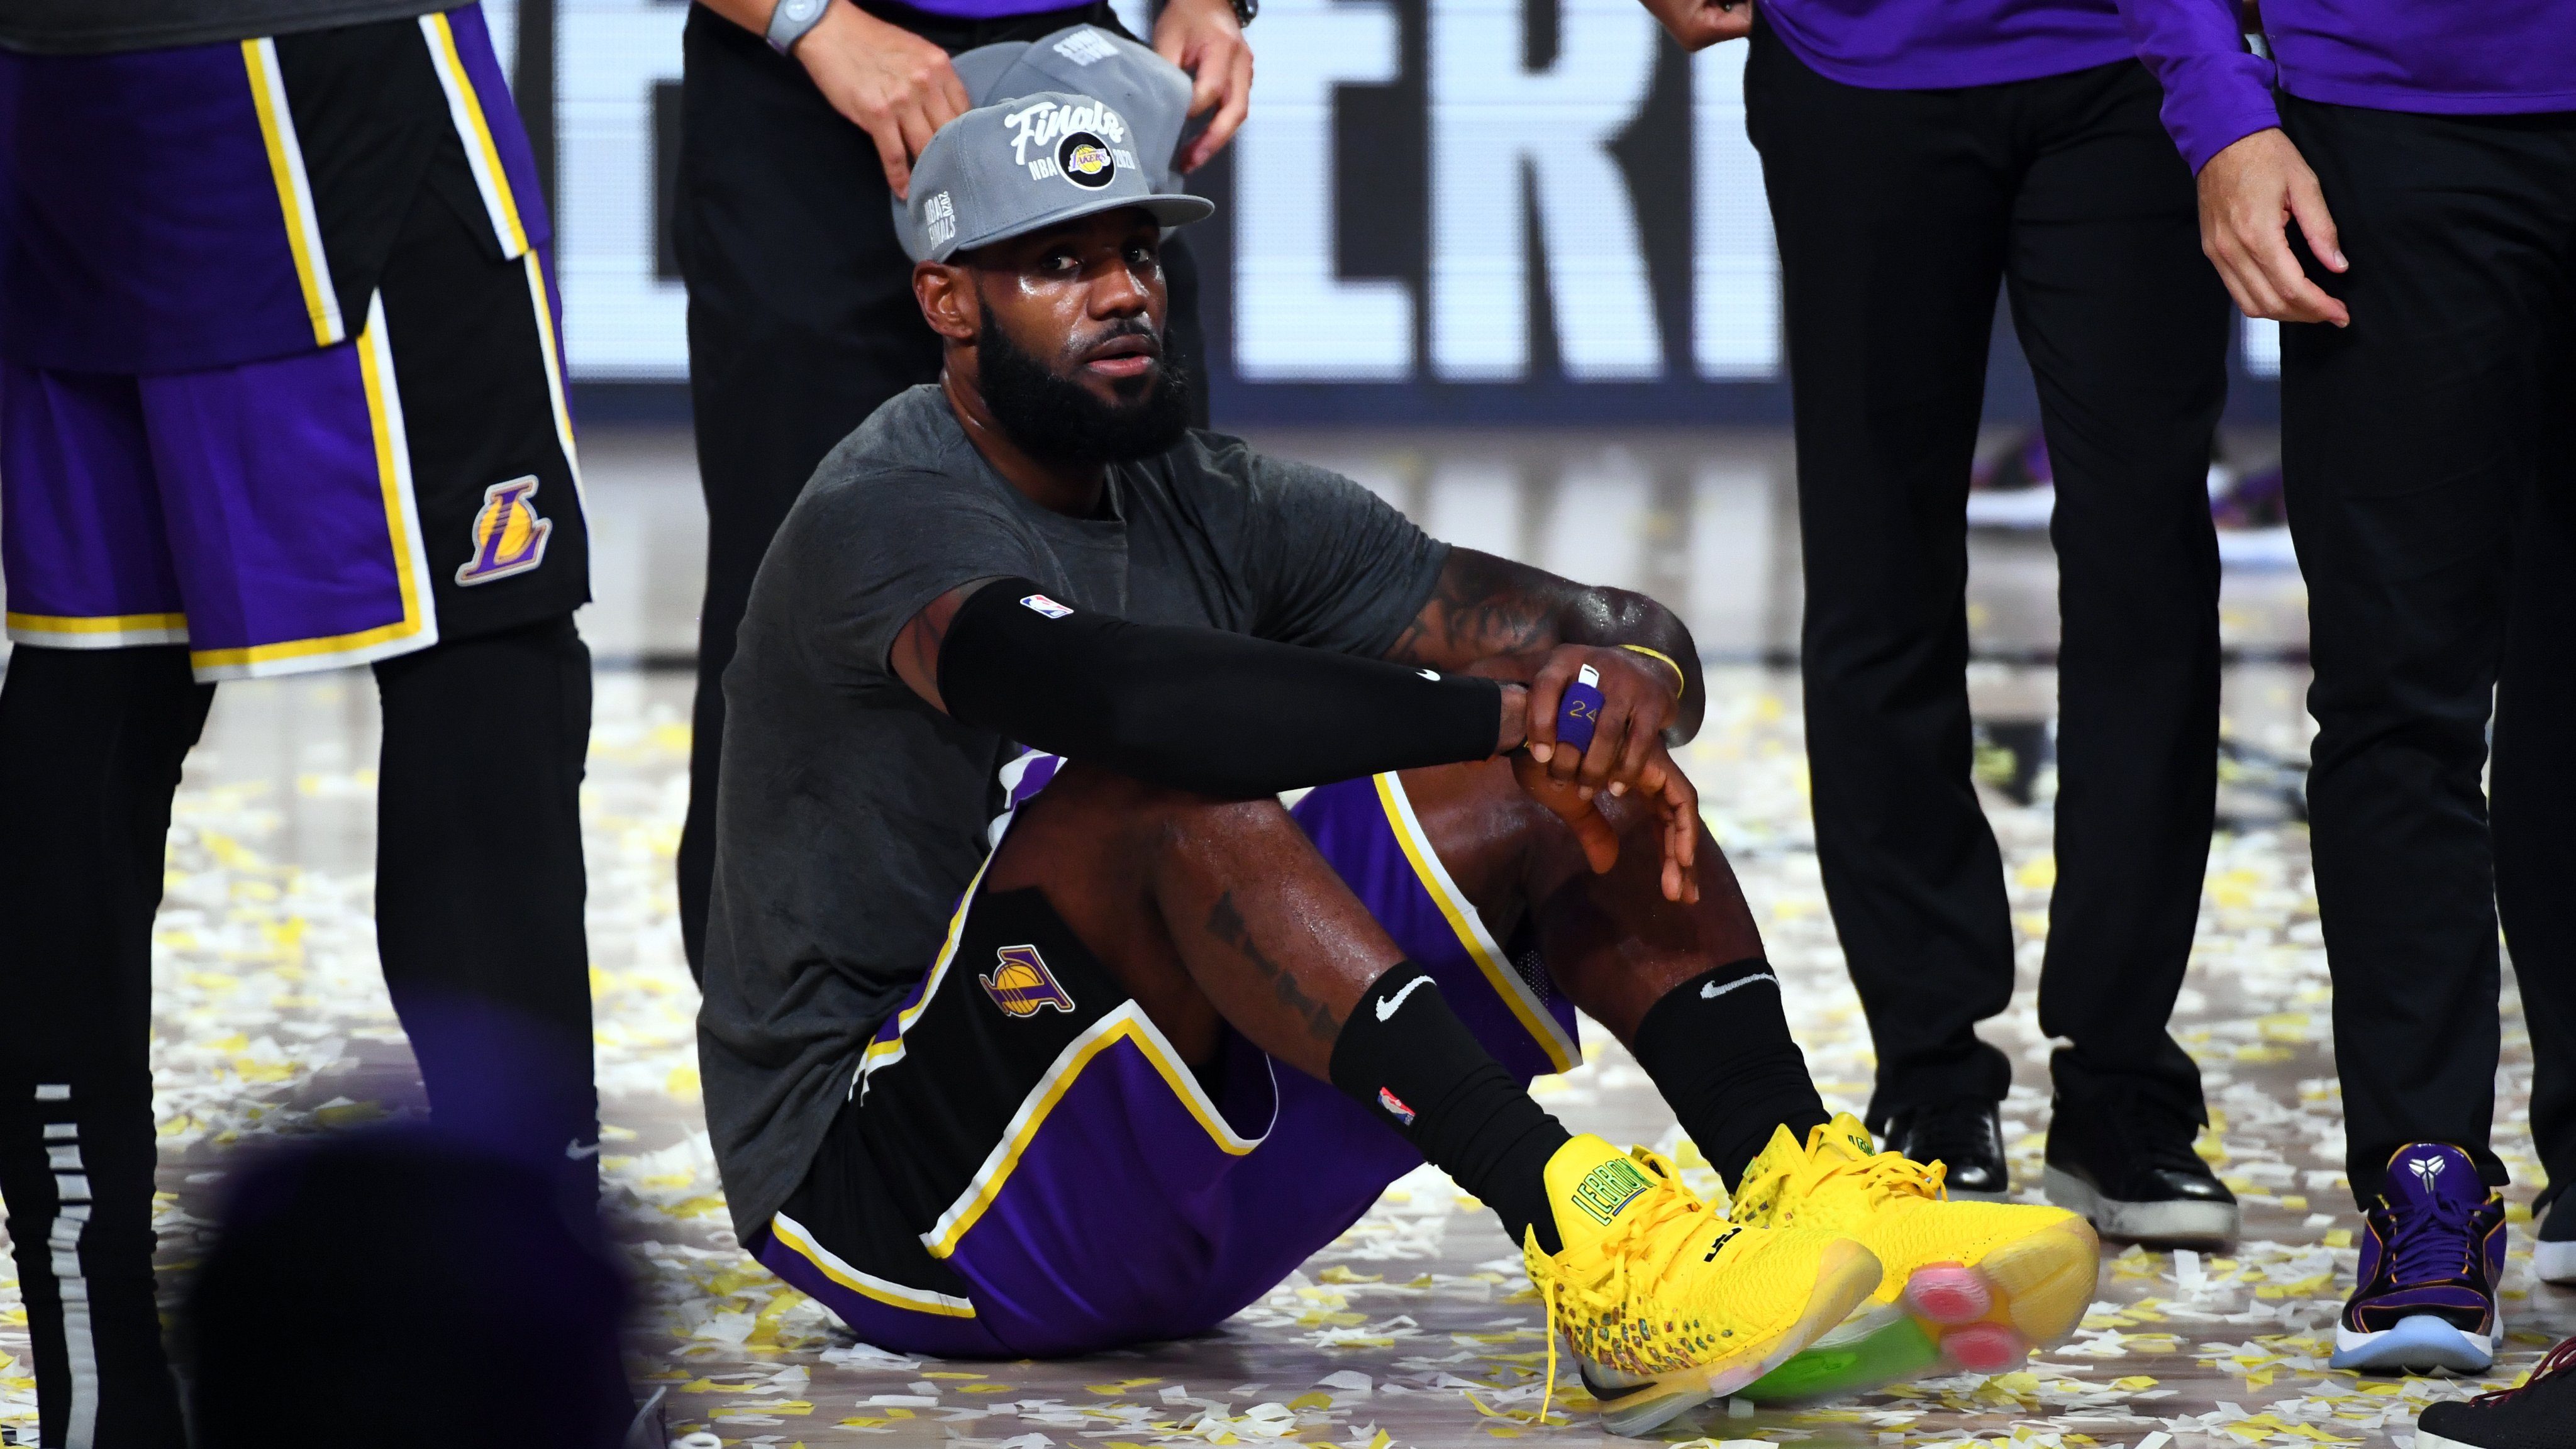 ‘King James’ has Lakers eyeing return to NBA throne